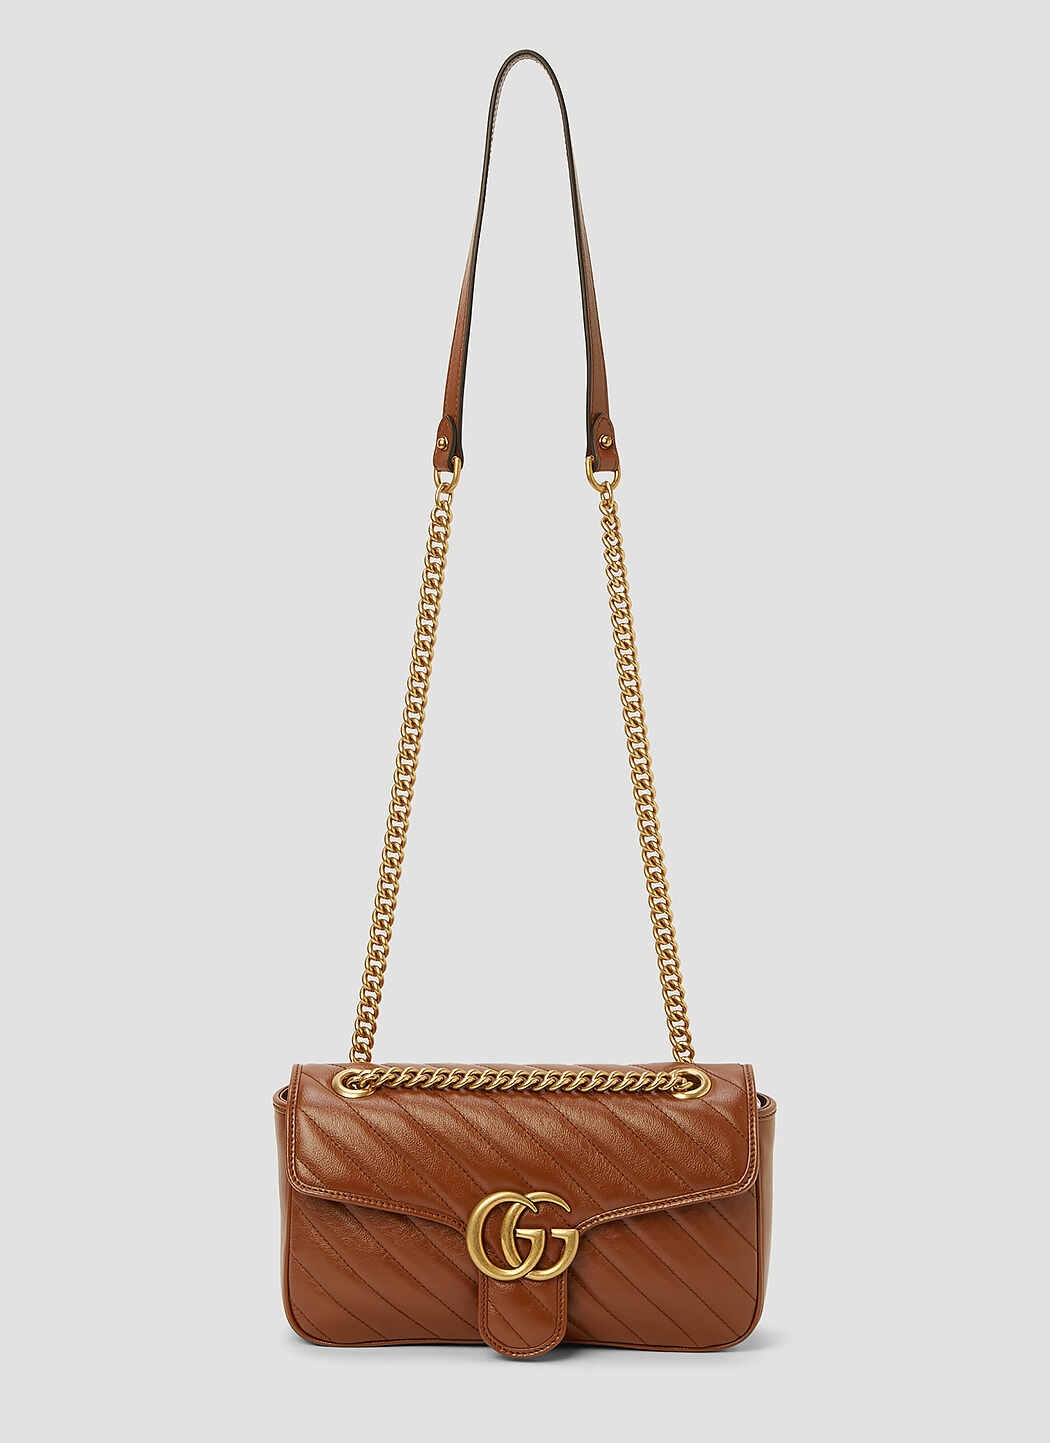 New Gucci Marmont Black Velvet Handbag Limited Edition | eBay